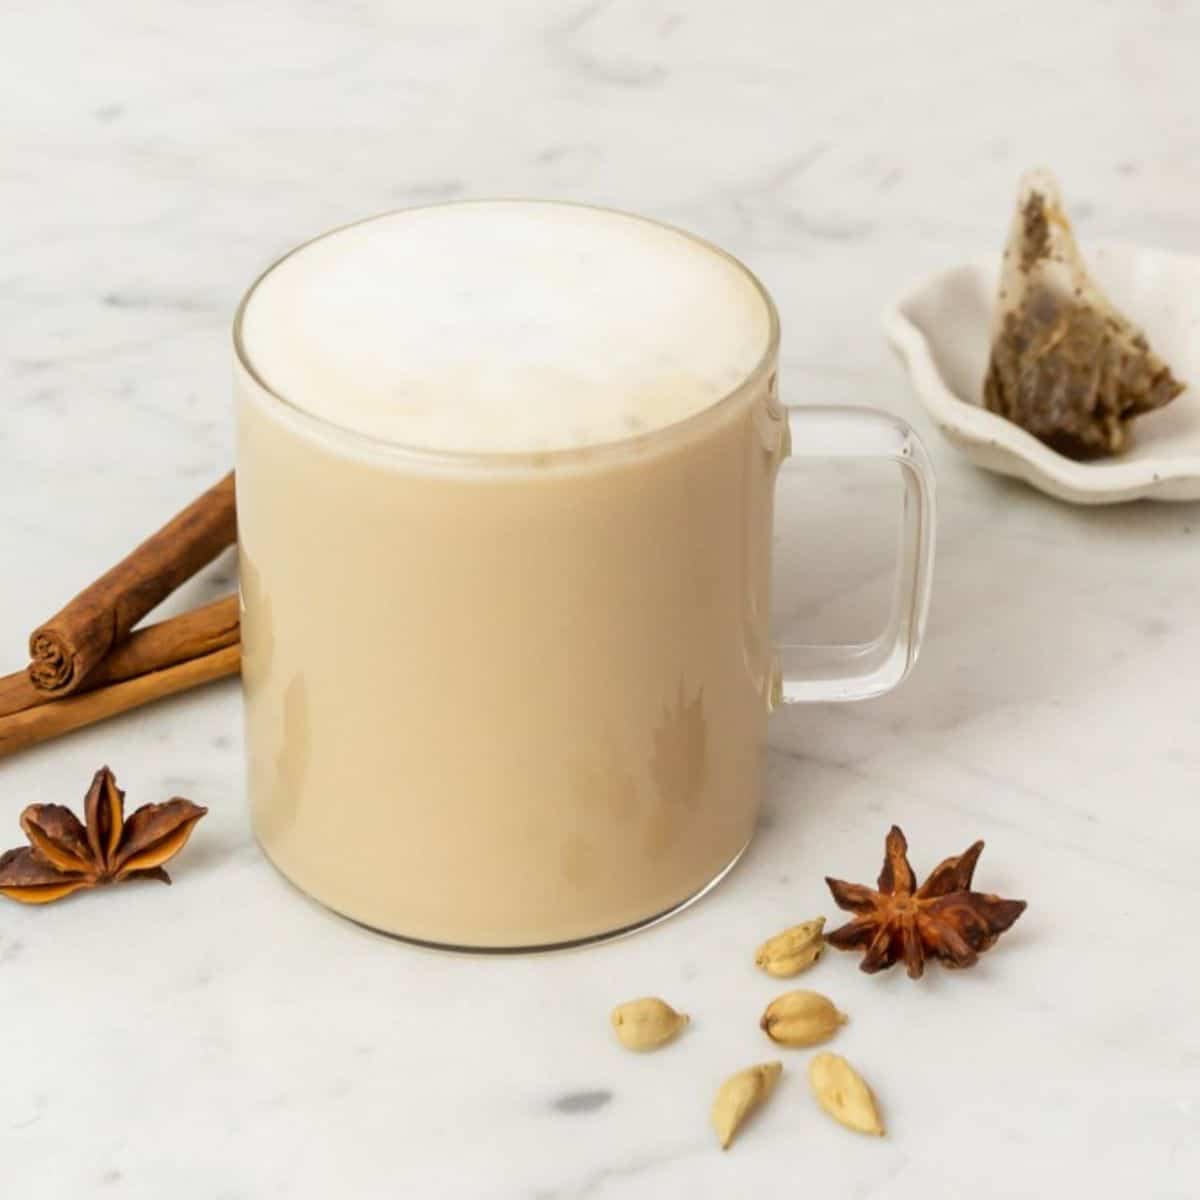 Chai tea latte in glass mug with cinnamon stick.